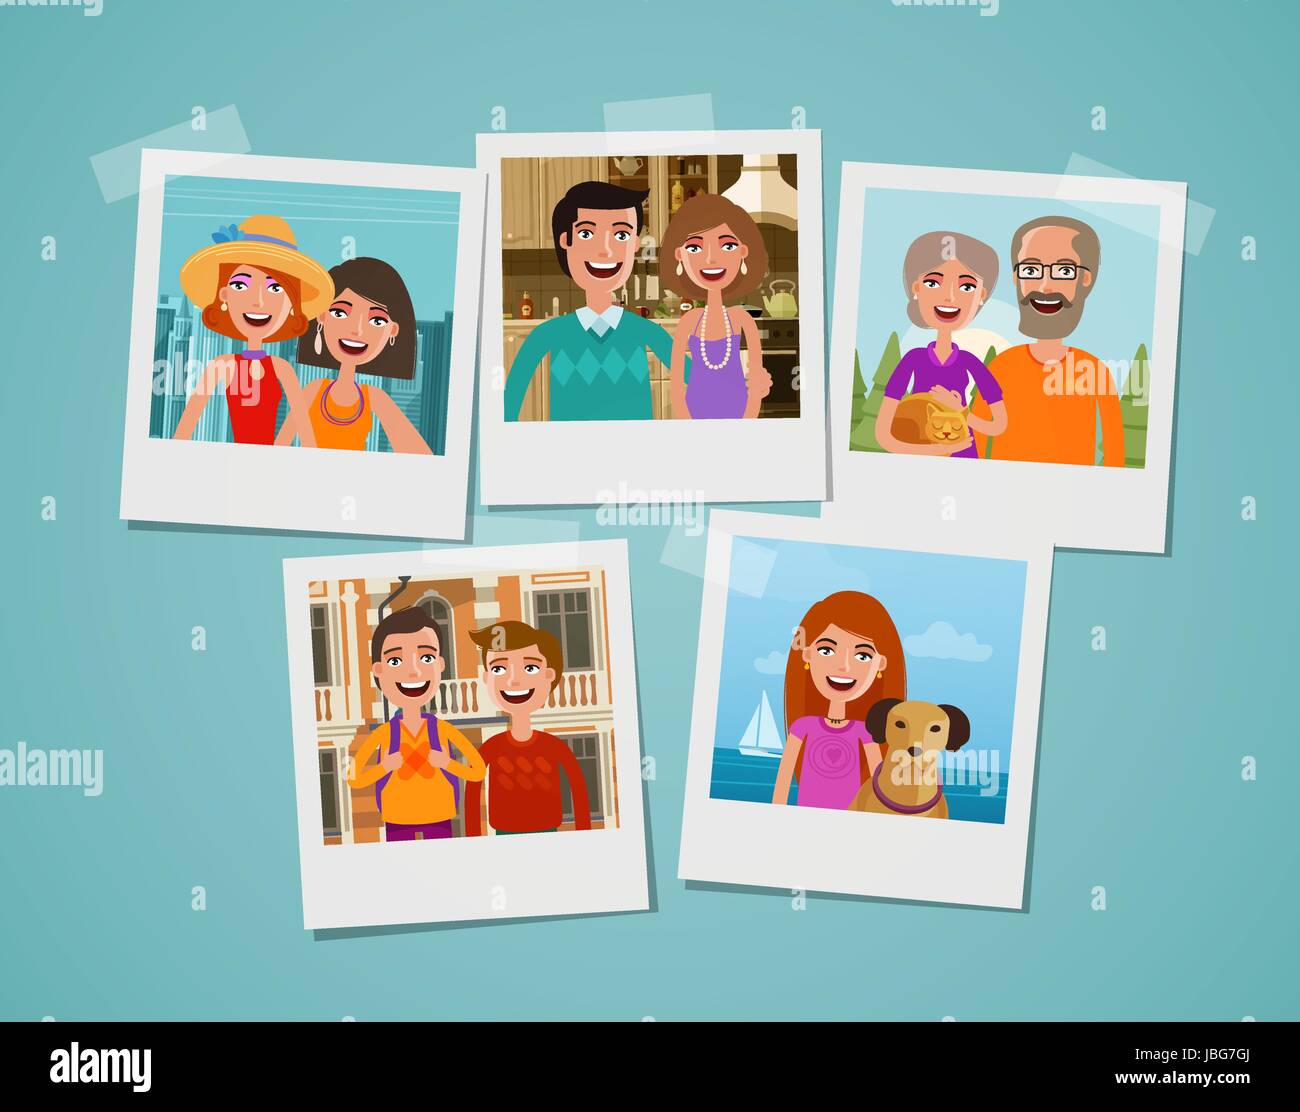 Familien Fotoalbum Menschen Eltern Und Kinder Konzept Cartoon Vektor Illustration Stock Vektorgrafik Alamy